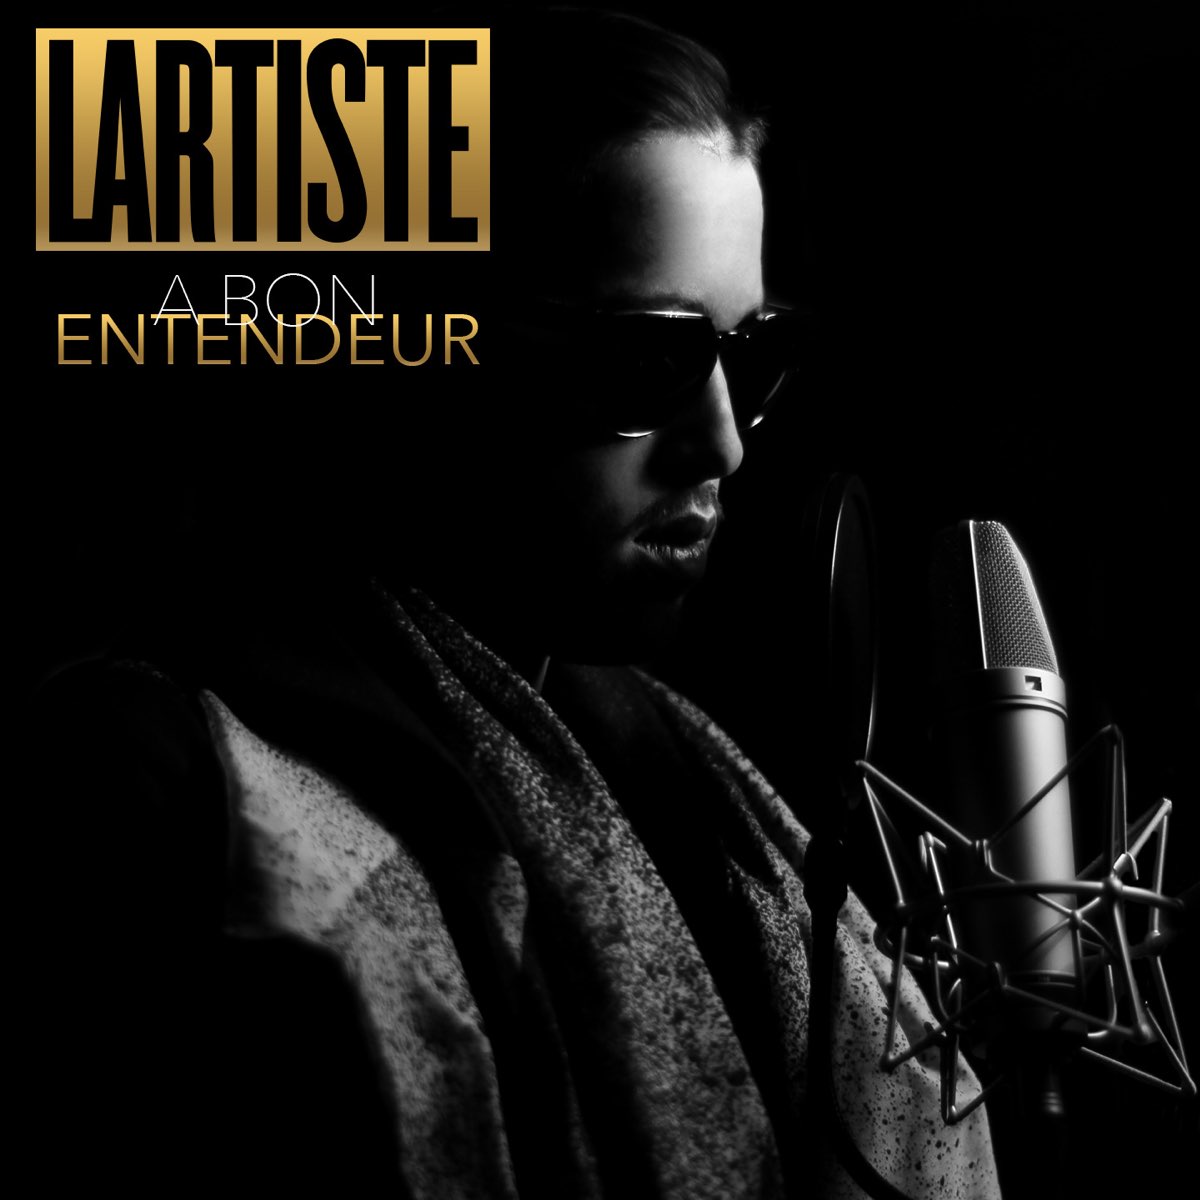 A bon entendeur - Single by Lartiste on Apple Music